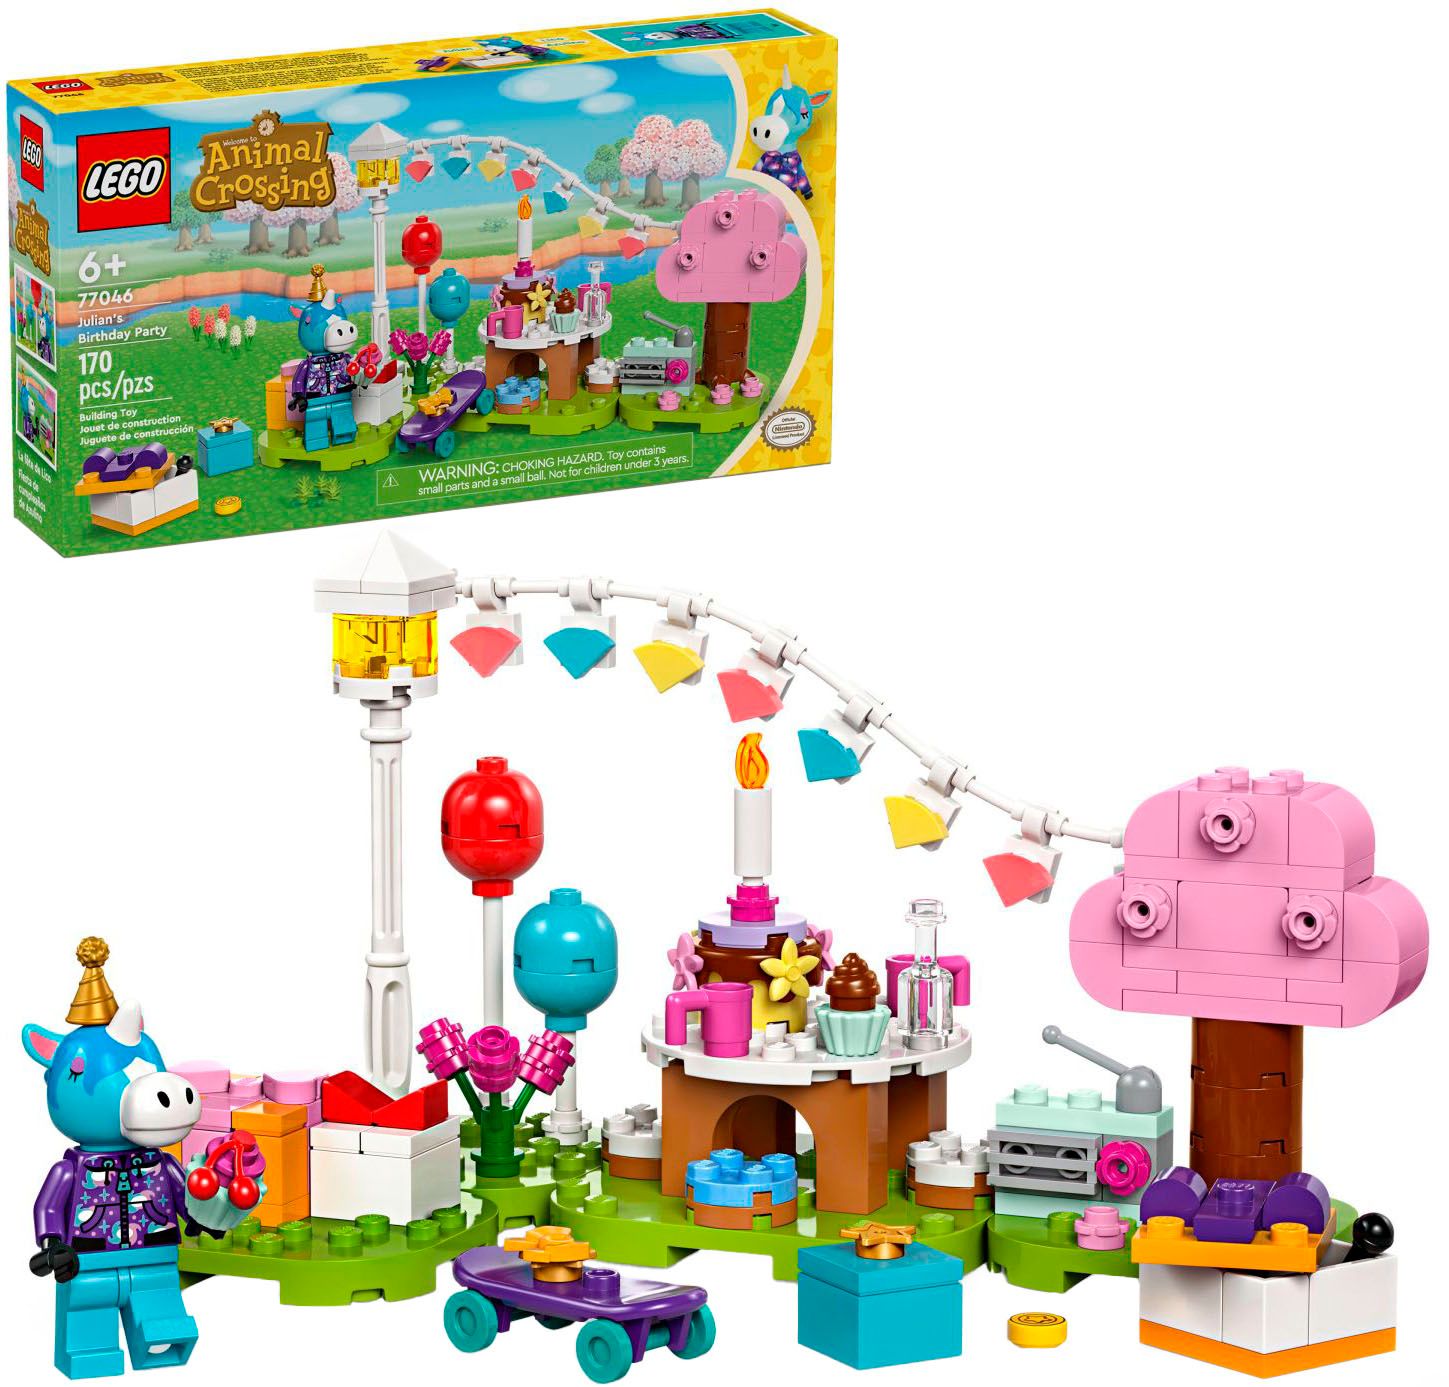 LEGO Animal Crossing Julian’s Birthday Party Video Game Toy 77046 6471340 - Best Buy | Best Buy U.S.